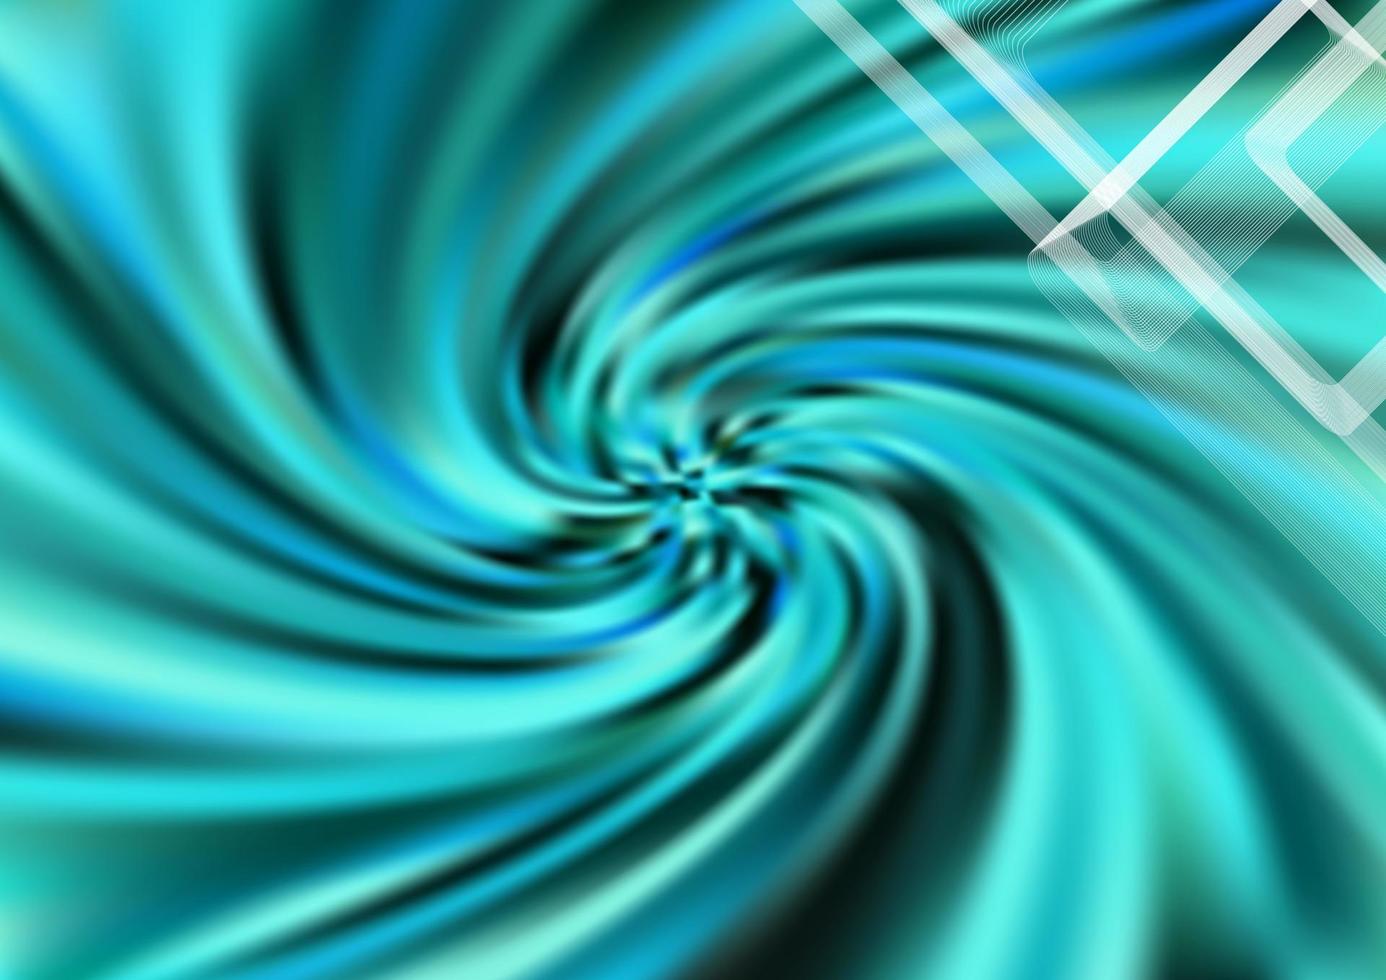 abstracte blauwgroen achtergrond whit spiraal, turquoise gradiënt textuur achtergrond. vector